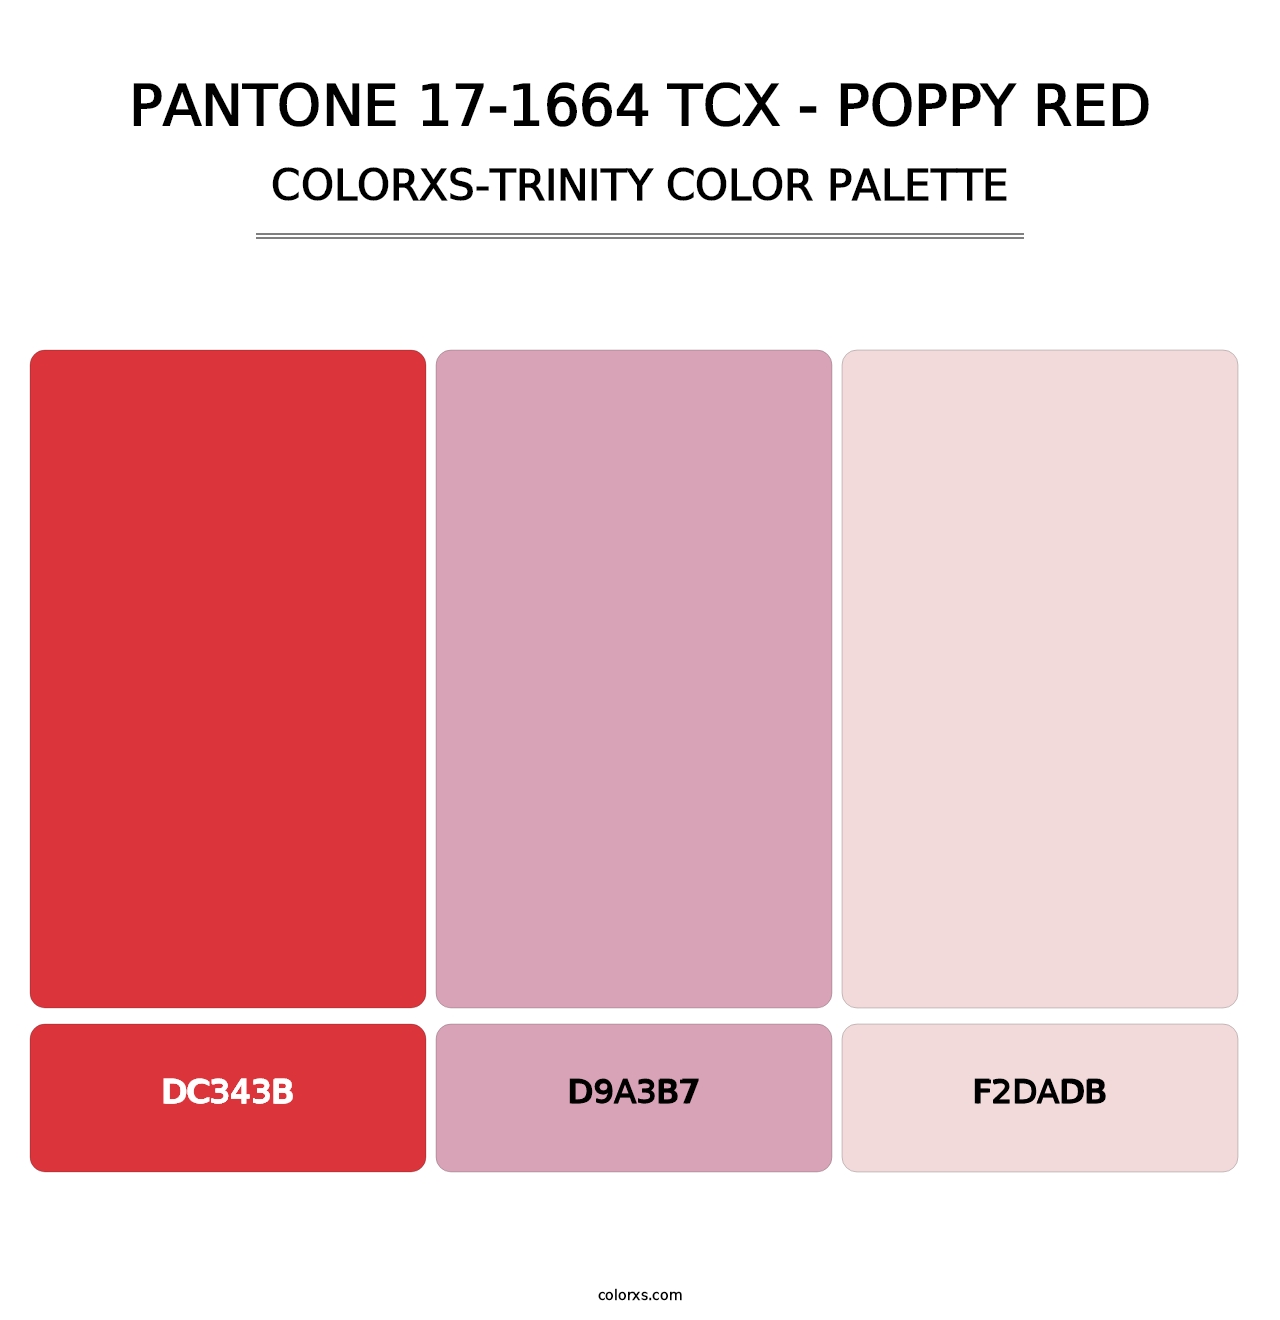 PANTONE 17-1664 TCX - Poppy Red - Colorxs Trinity Palette